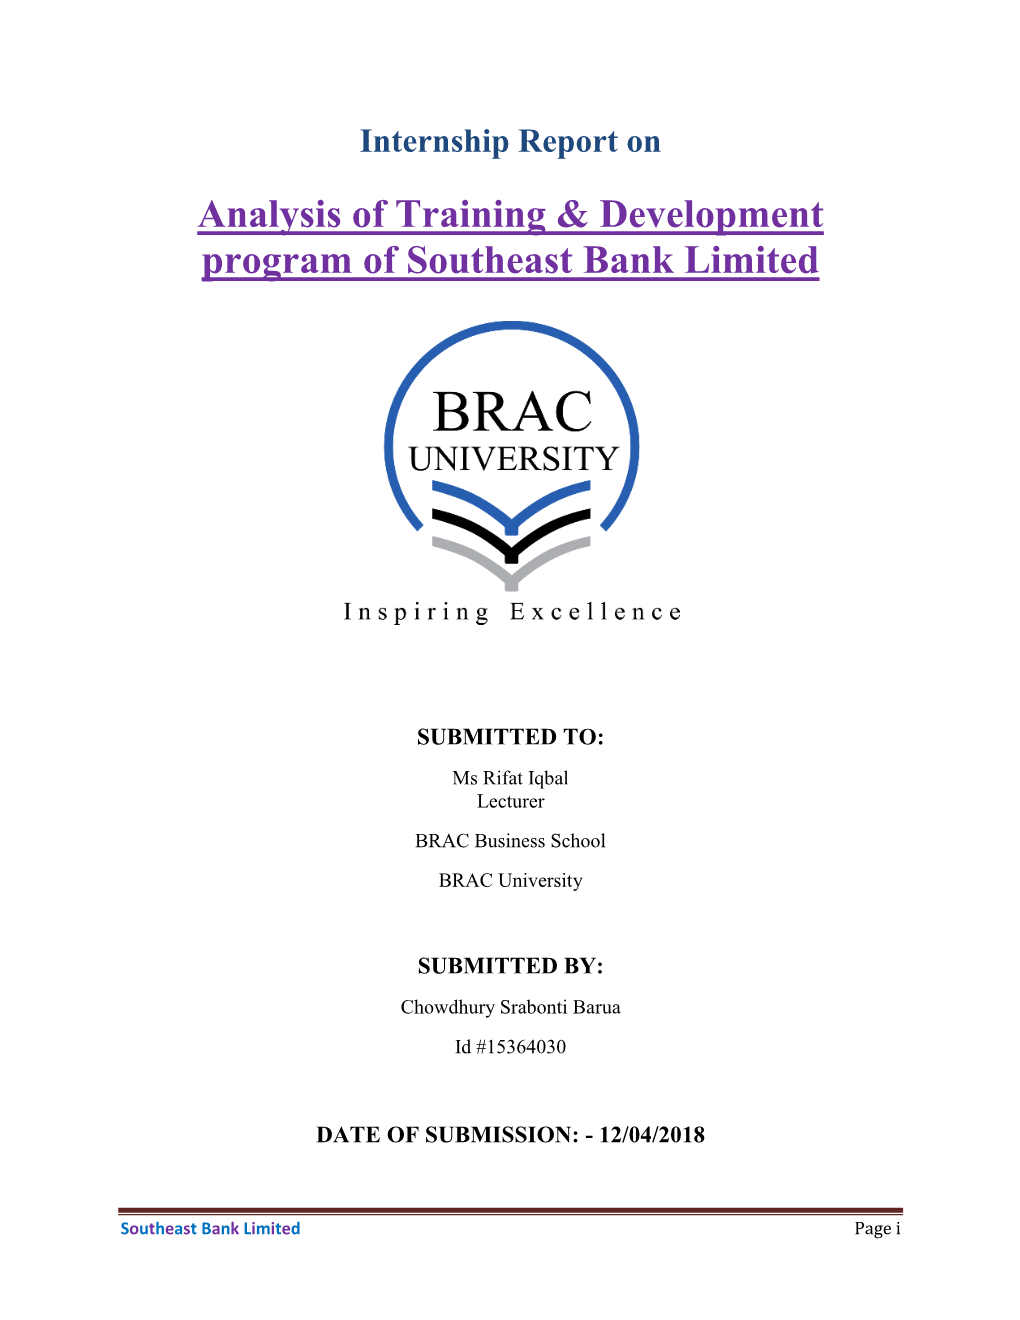 Analysis of Training & Development Program of Southeast Bank Limited